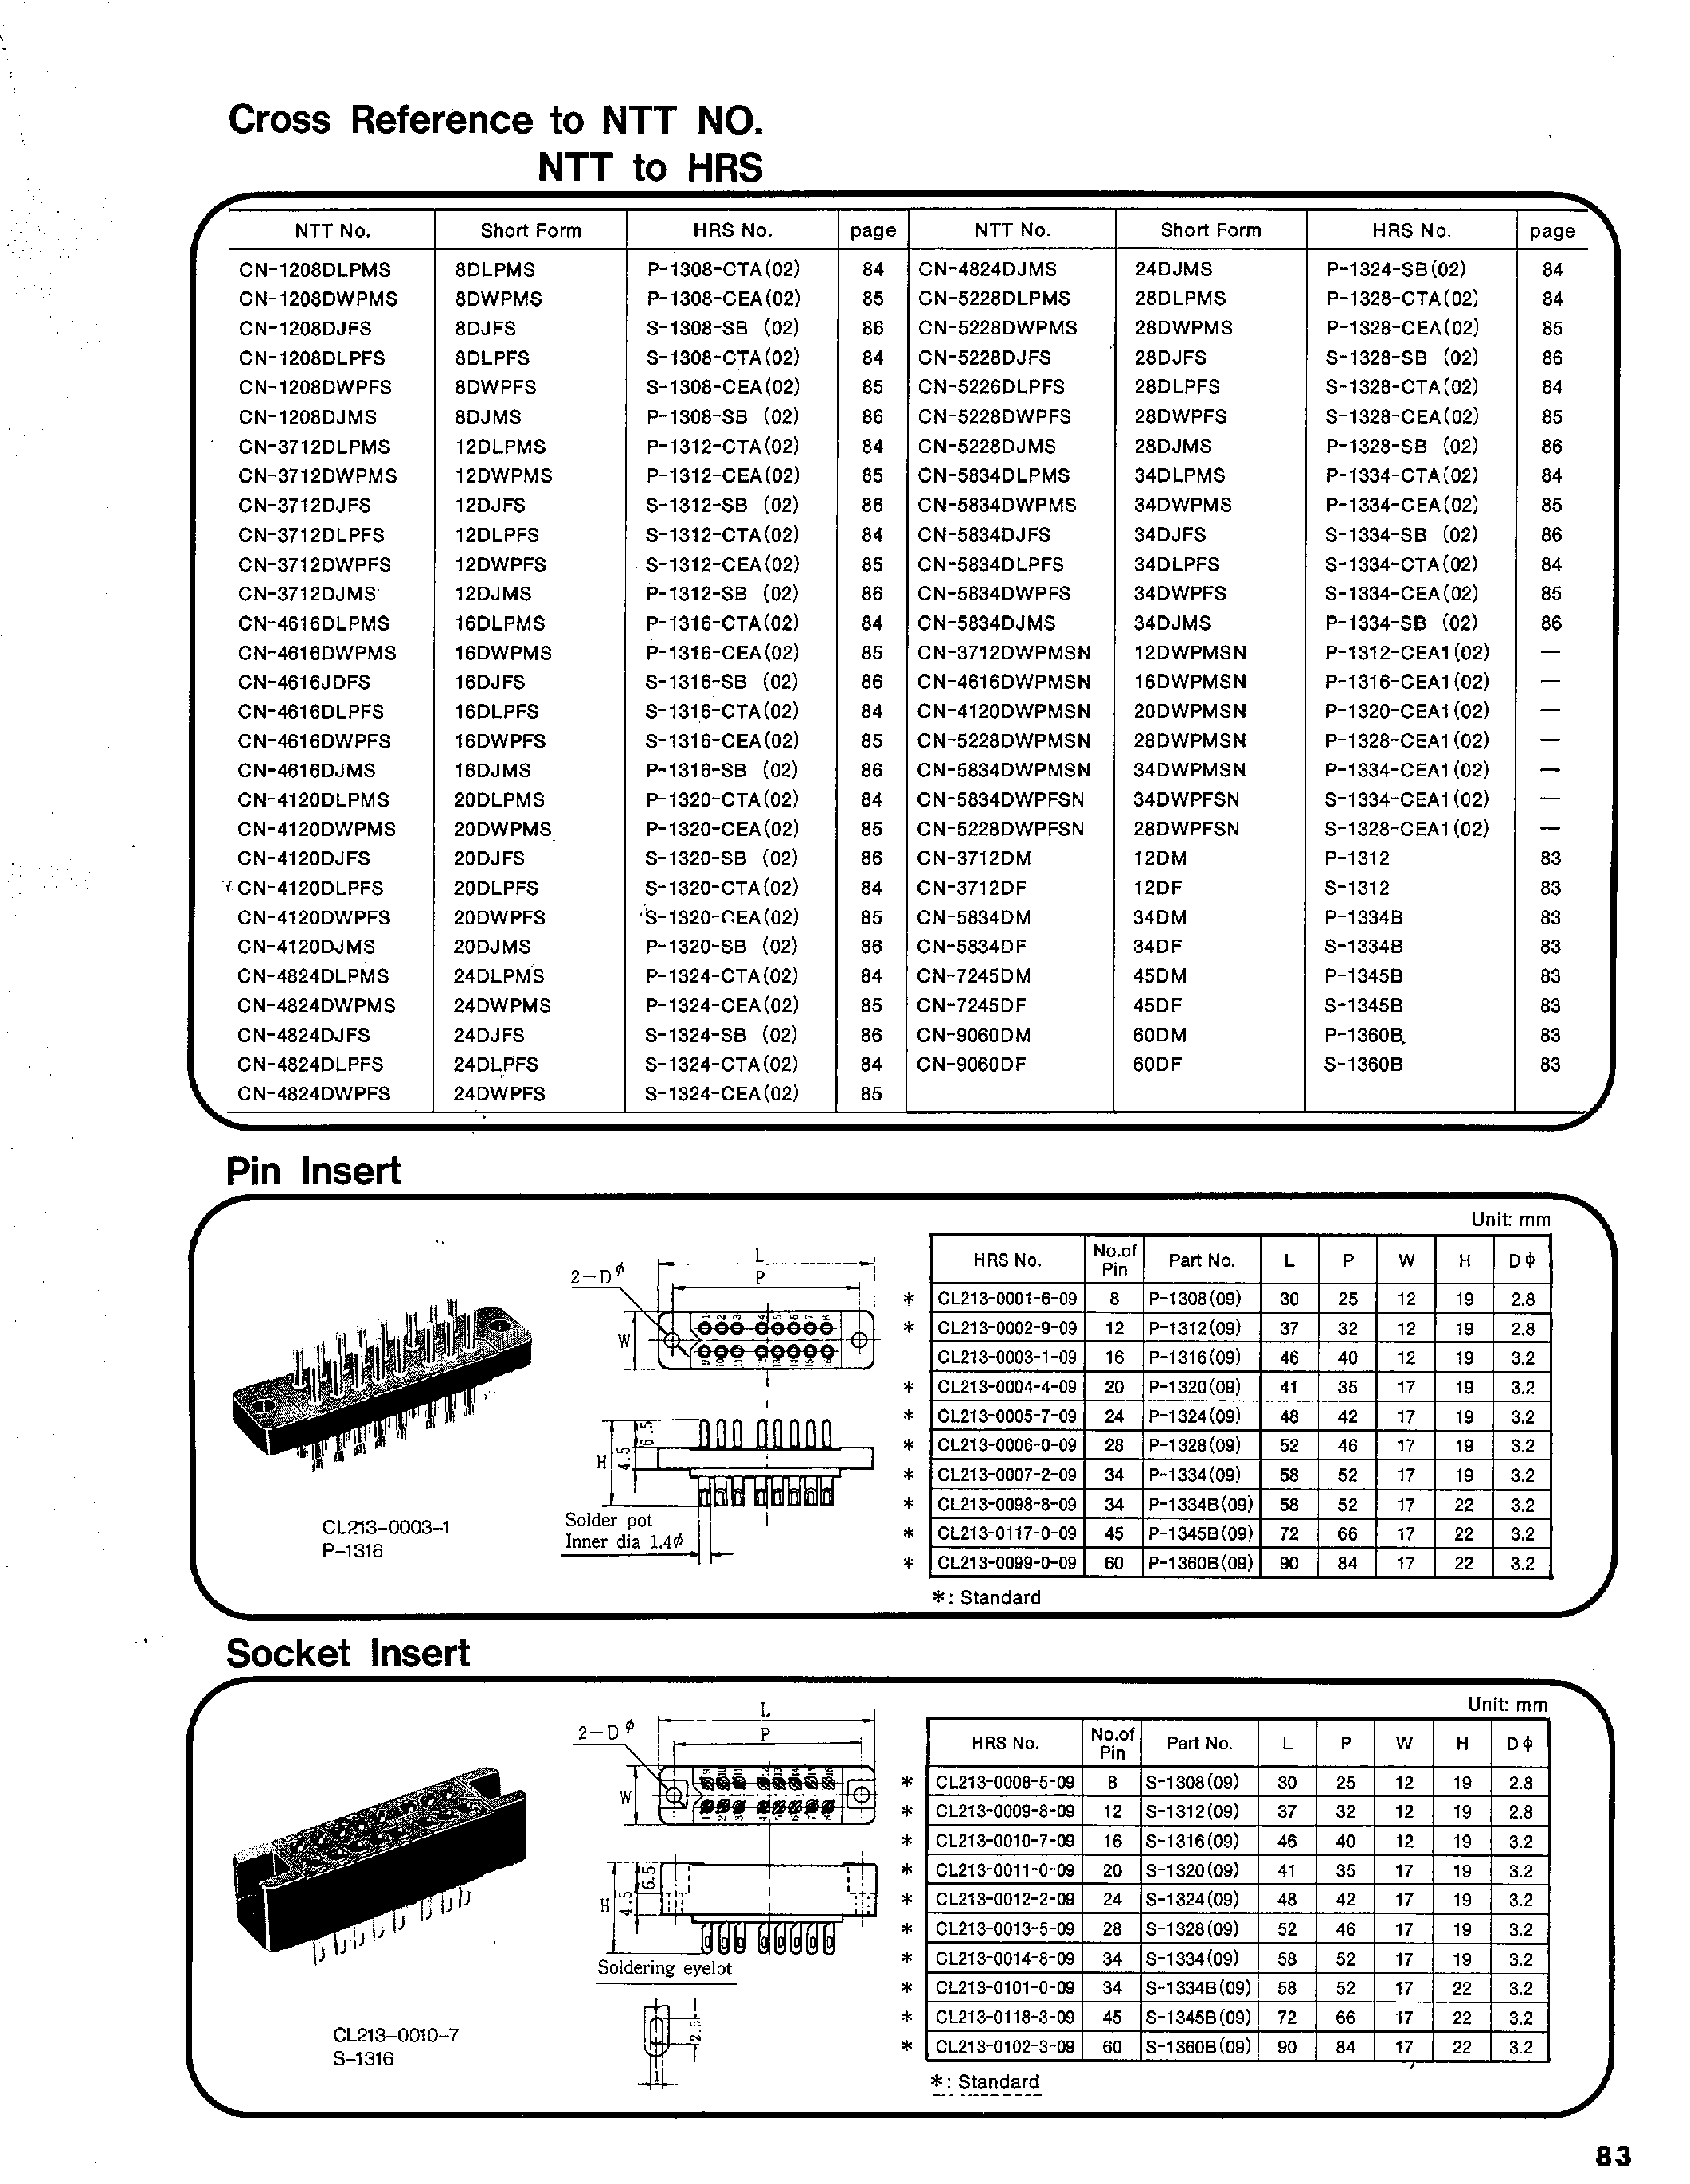 Datasheet P-1324-H - 1300 SERIES RECTANGULAR CONNECTORS page 2